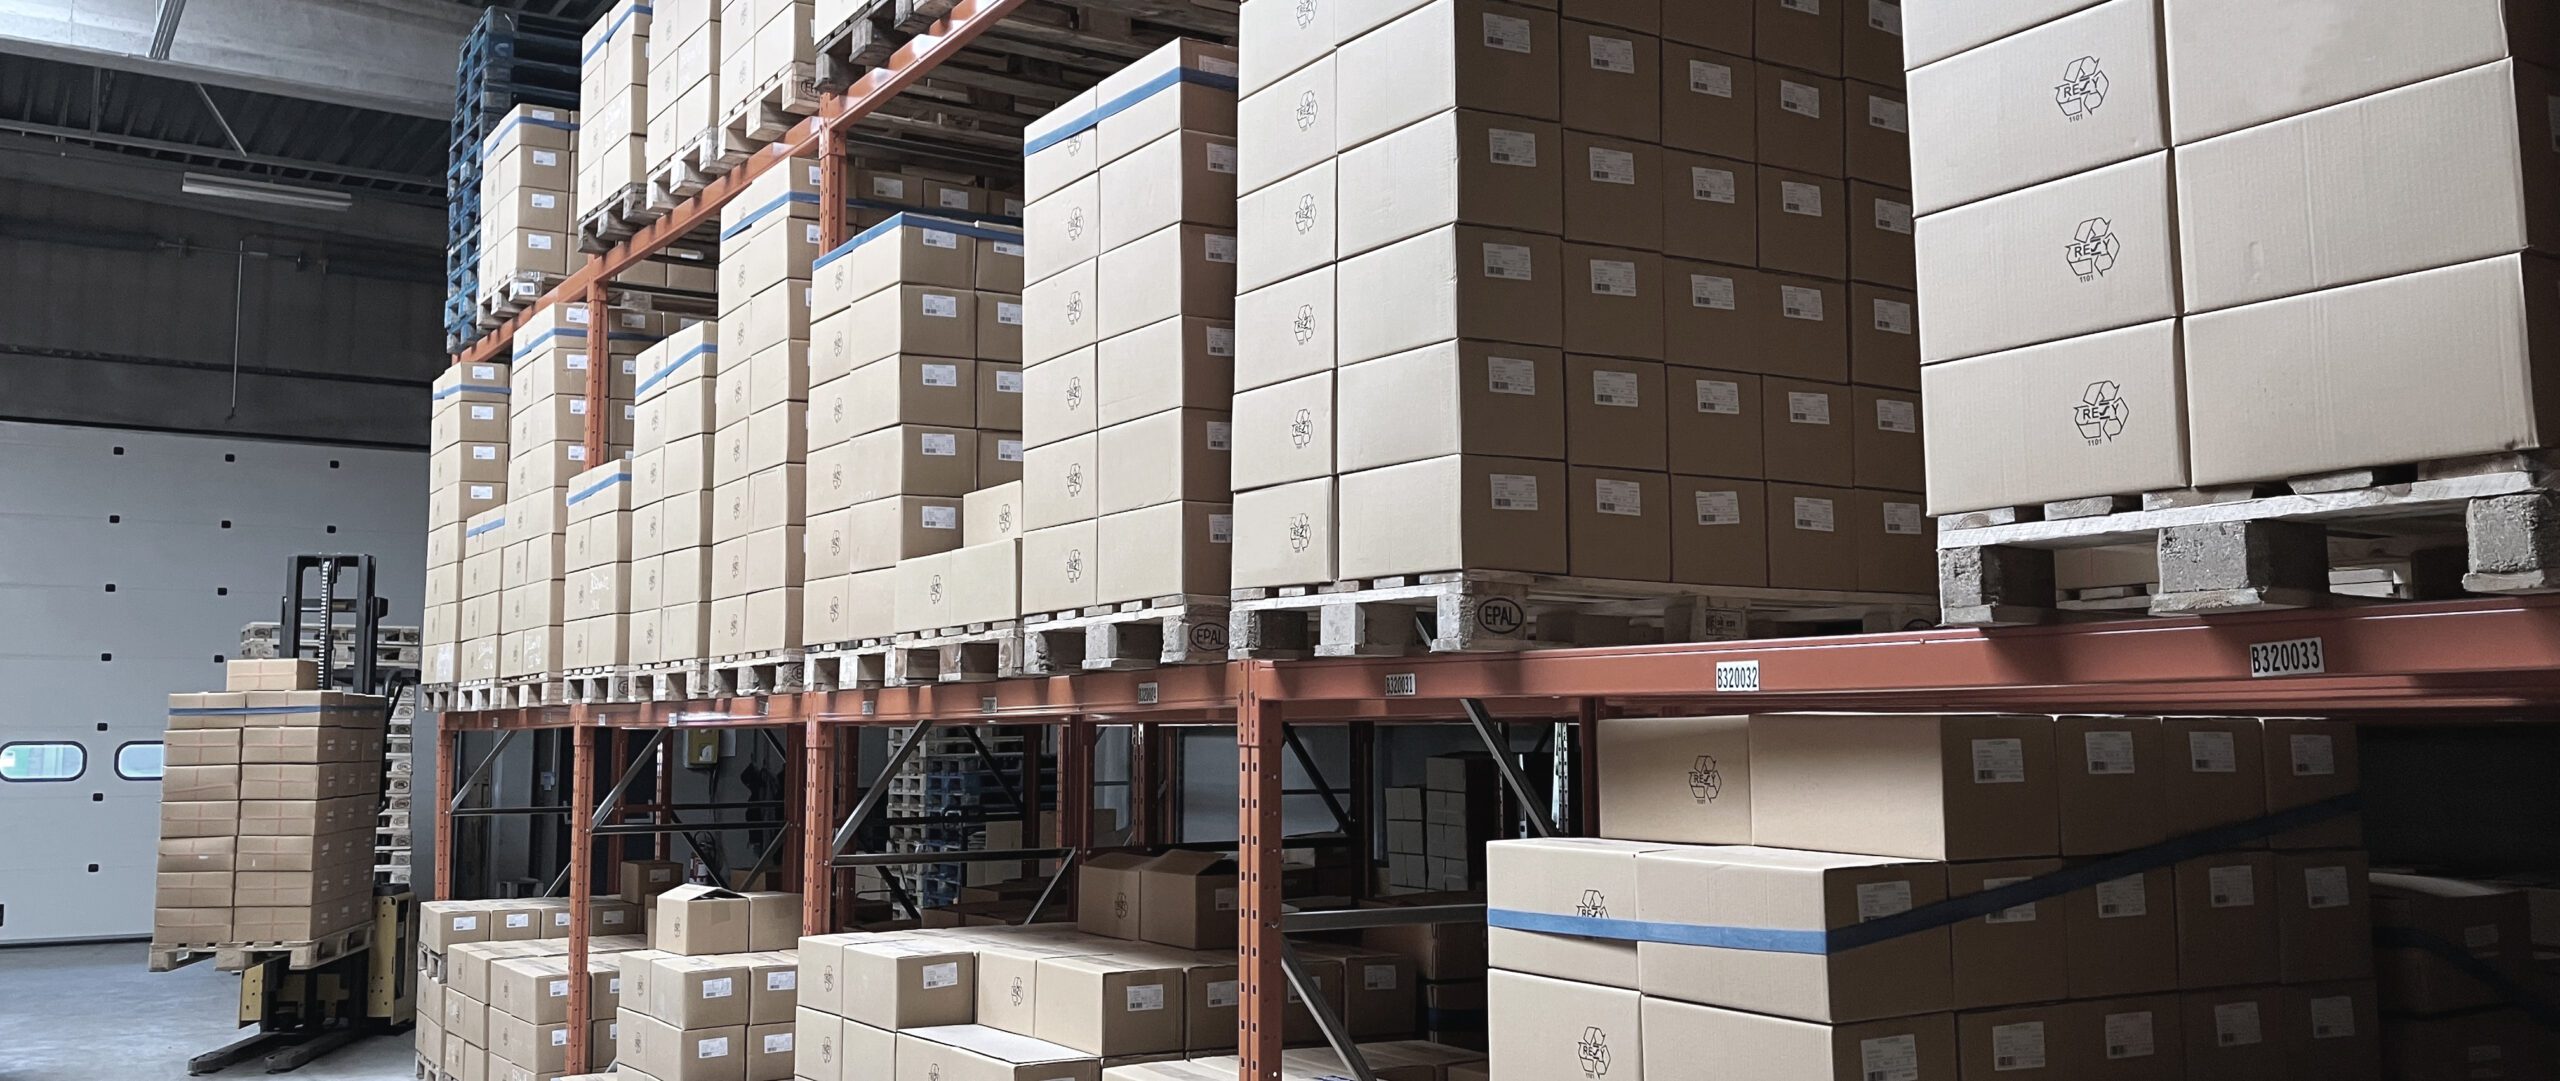 Nico wholesaler - warehouse and pallets storage